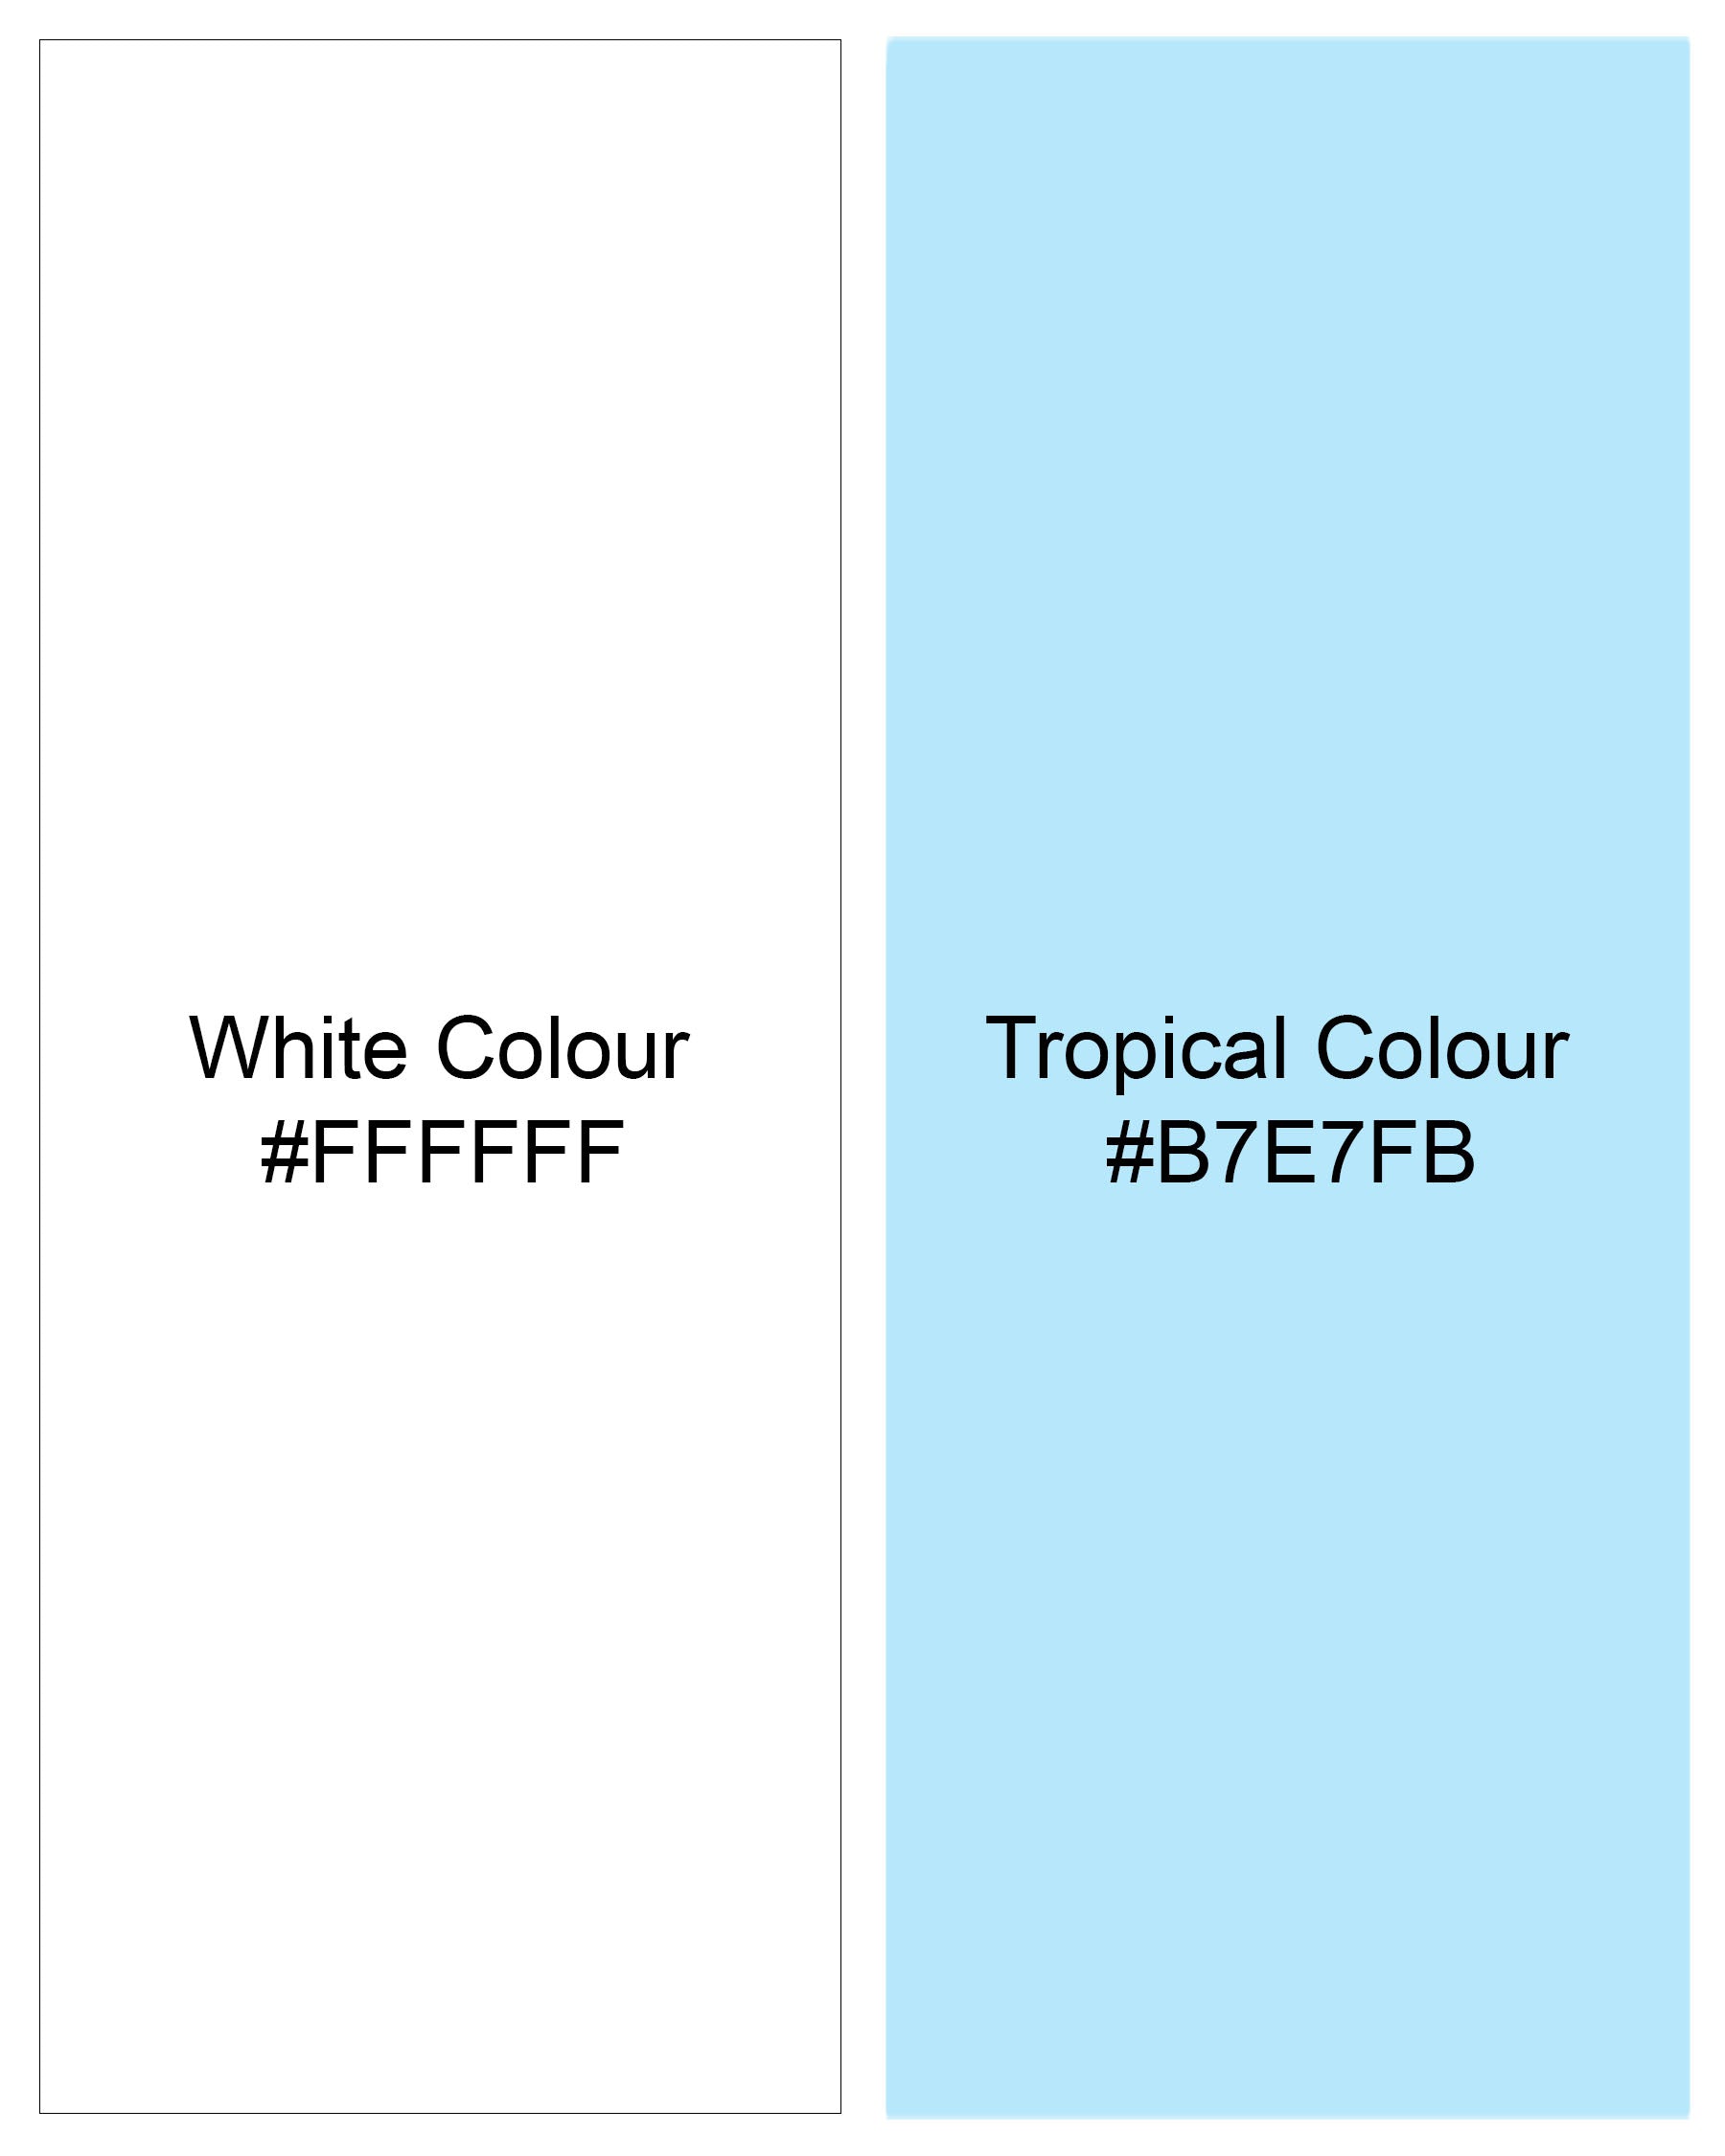 Tropical Blue and White Scalloped Pattern Printed Premium Cotton Kurta Shirt 7915-KS-38, 7915-KS-H-38, 7915-KS-39, 7915-KS-H-39, 7915-KS-40, 7915-KS-H-40, 7915-KS-42, 7915-KS-H-42, 7915-KS-44, 7915-KS-H-44, 7915-KS-46, 7915-KS-H-46, 7915-KS-48, 7915-KS-H-48, 7915-KS-50, 7915-KS-H-50, 7915-KS-52, 7915-KS-H-52